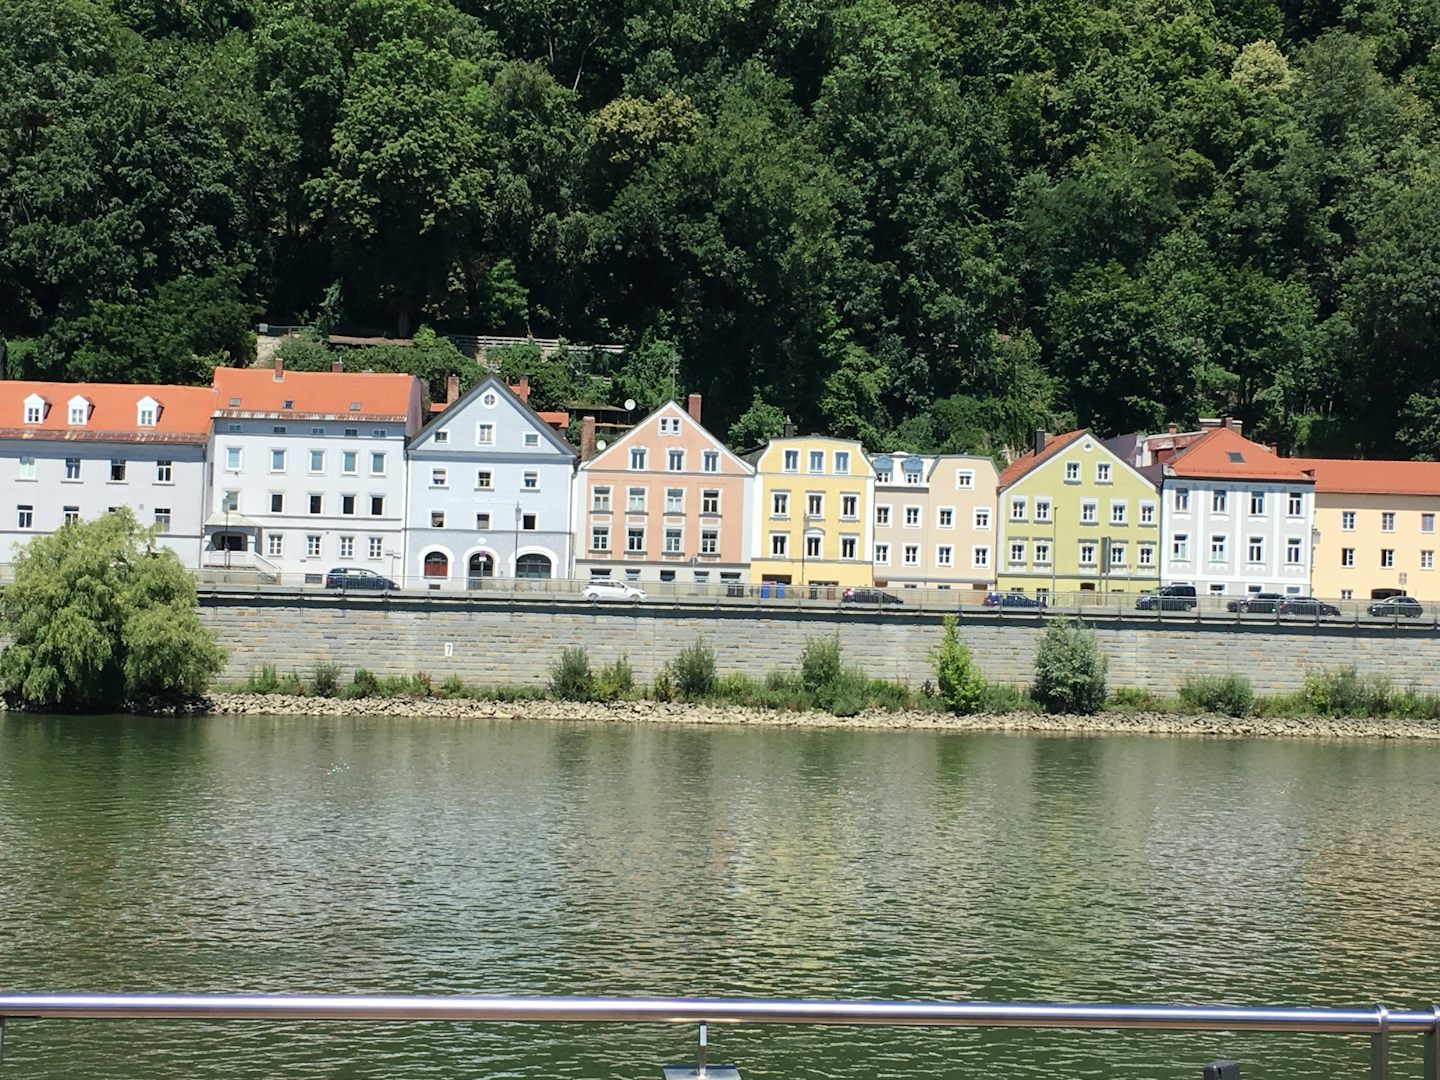 Sailing along the Danube